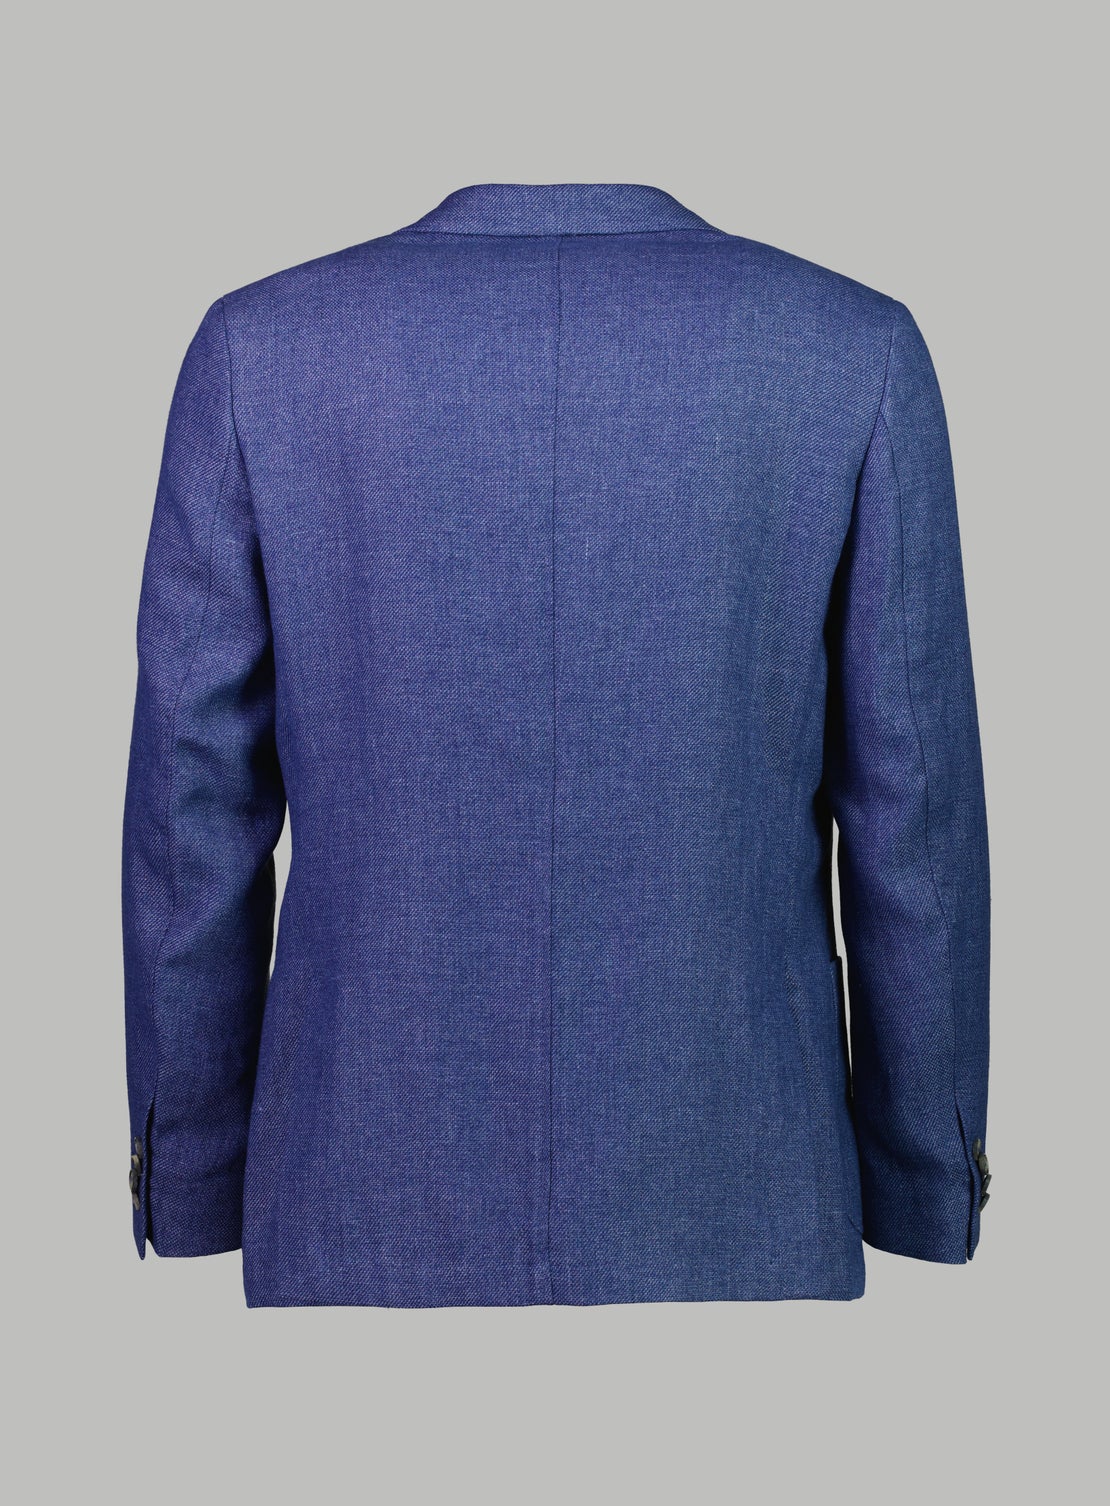 Coimbra Blue Hopsack Jacket